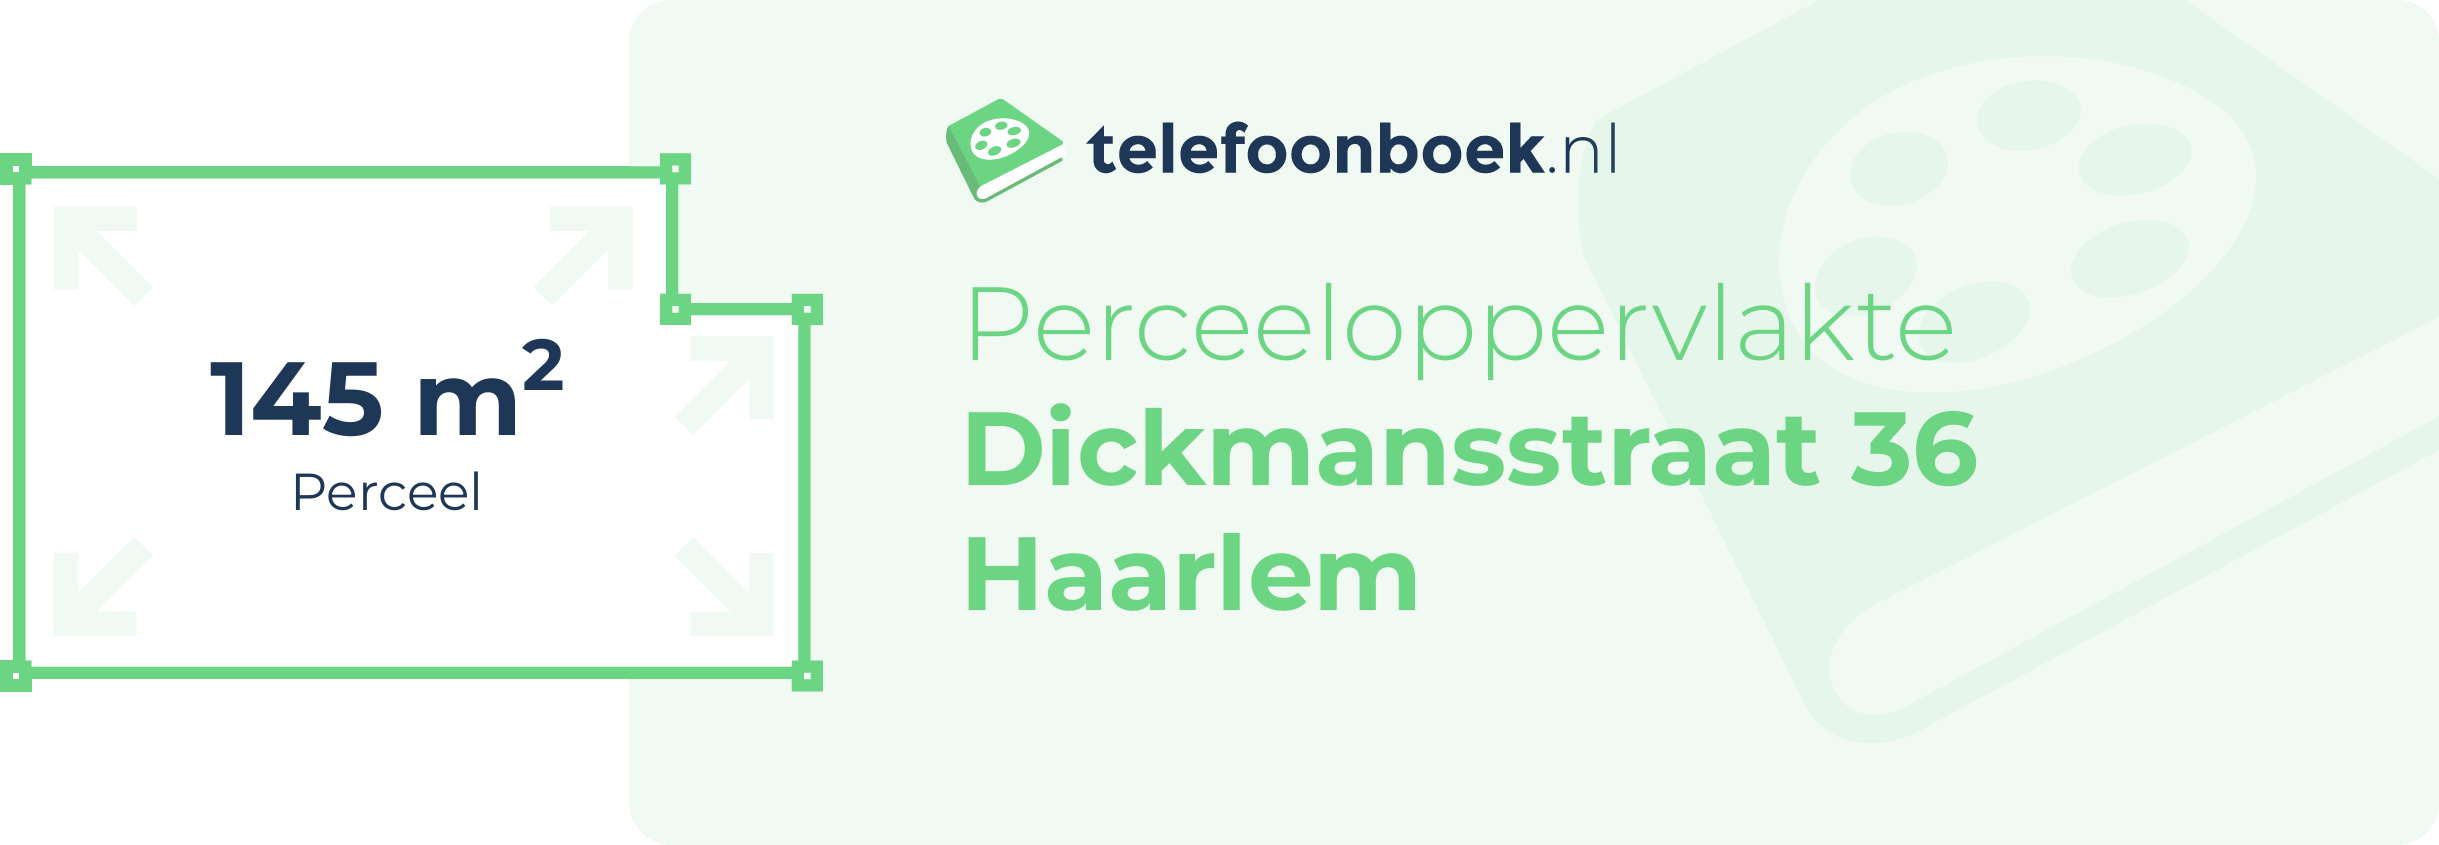 Perceeloppervlakte Dickmansstraat 36 Haarlem